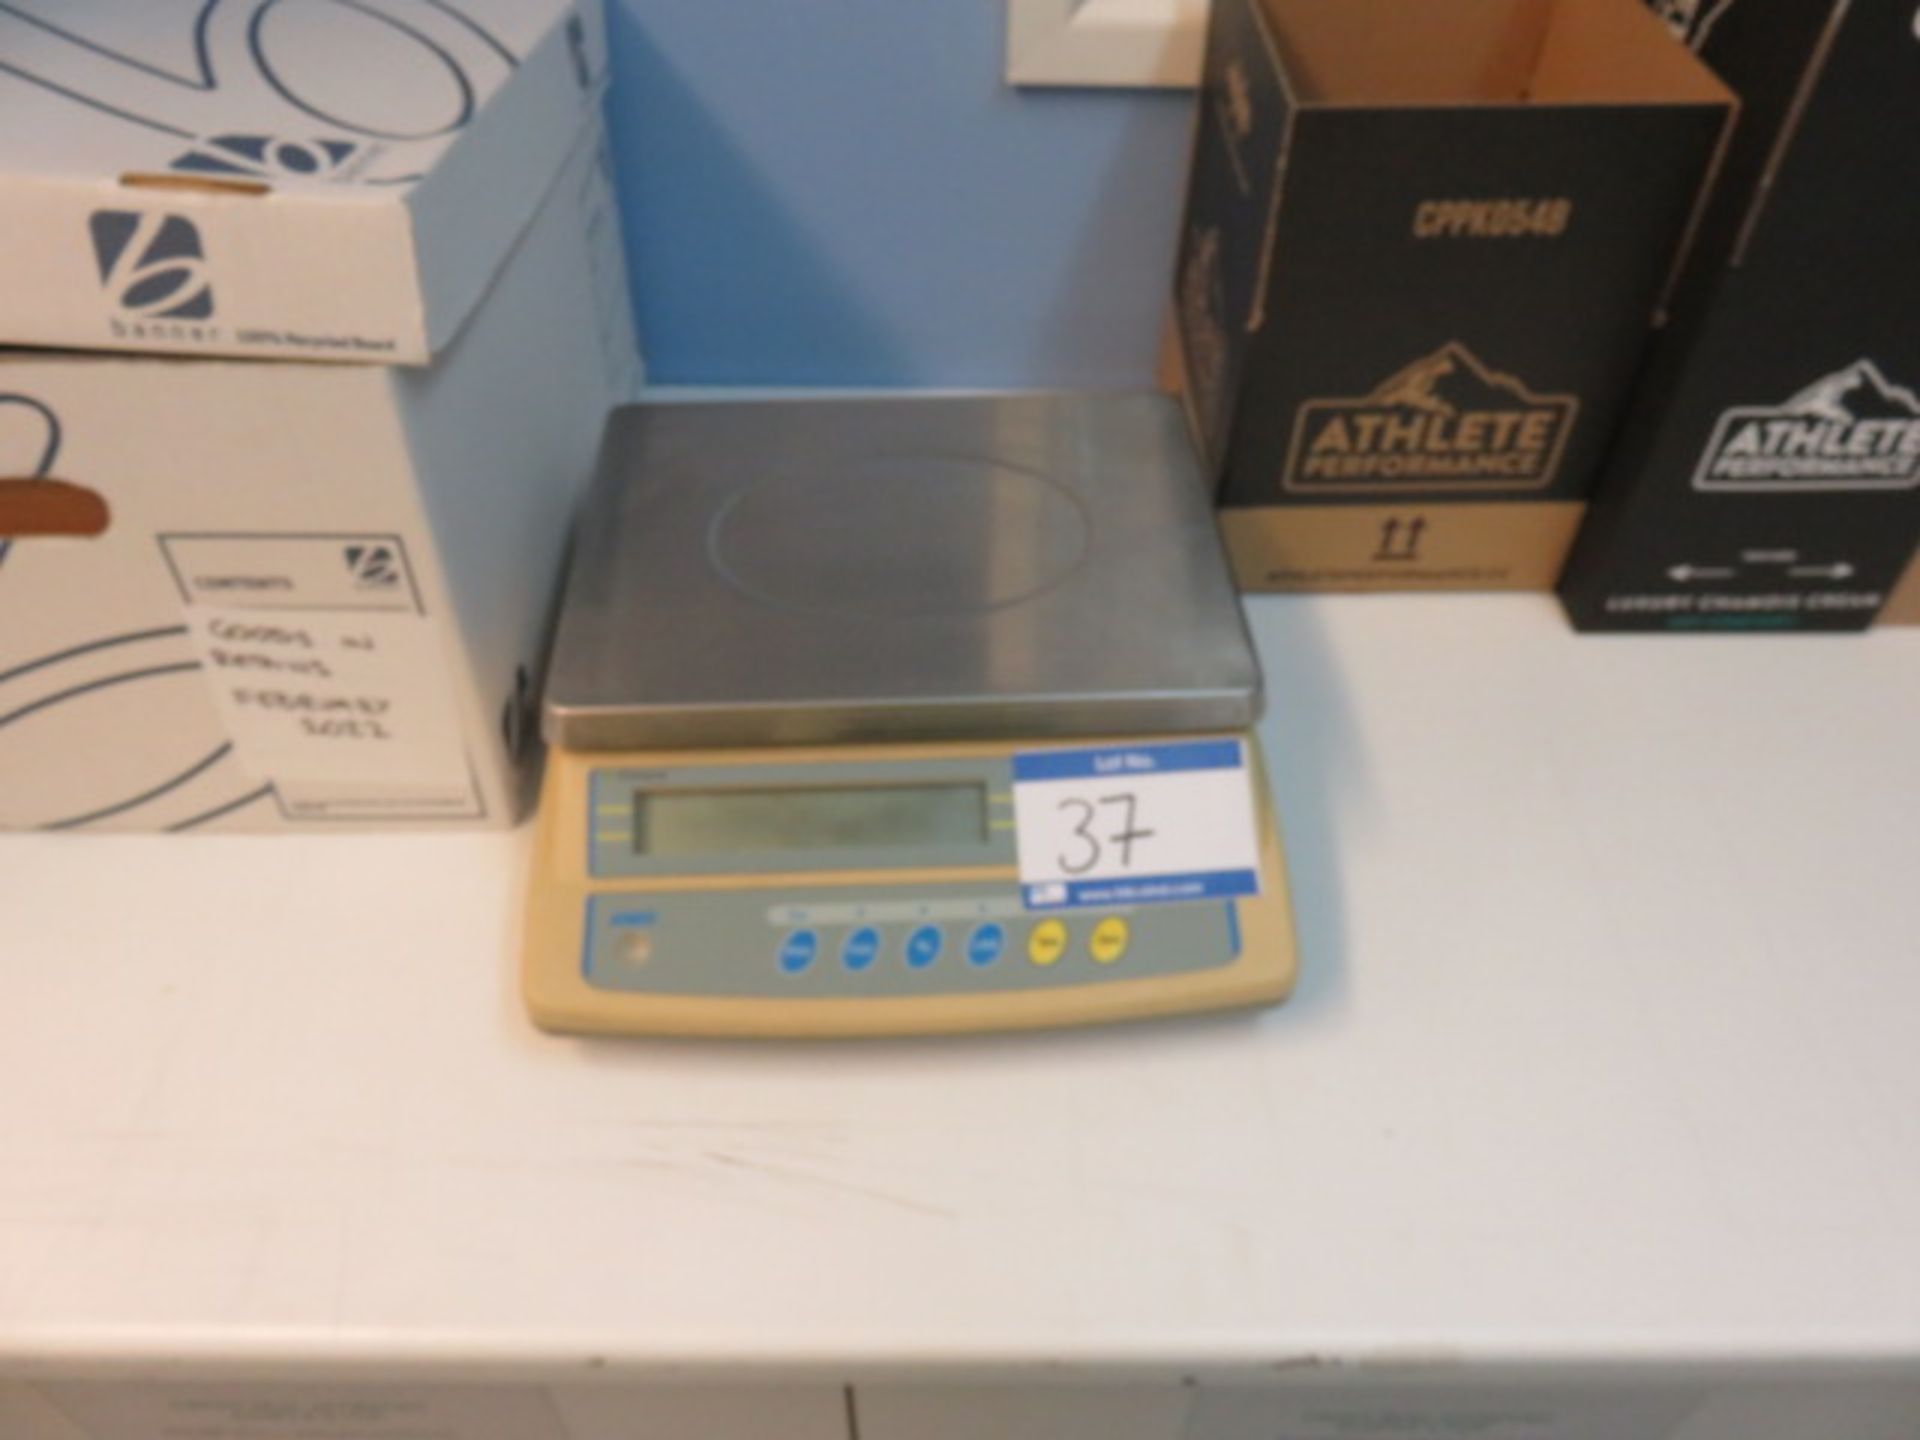 Adam Equipment TCW Digital Weigh Scale, Serial No. Ae128330 805 with 3000g x 0.1g Capacity